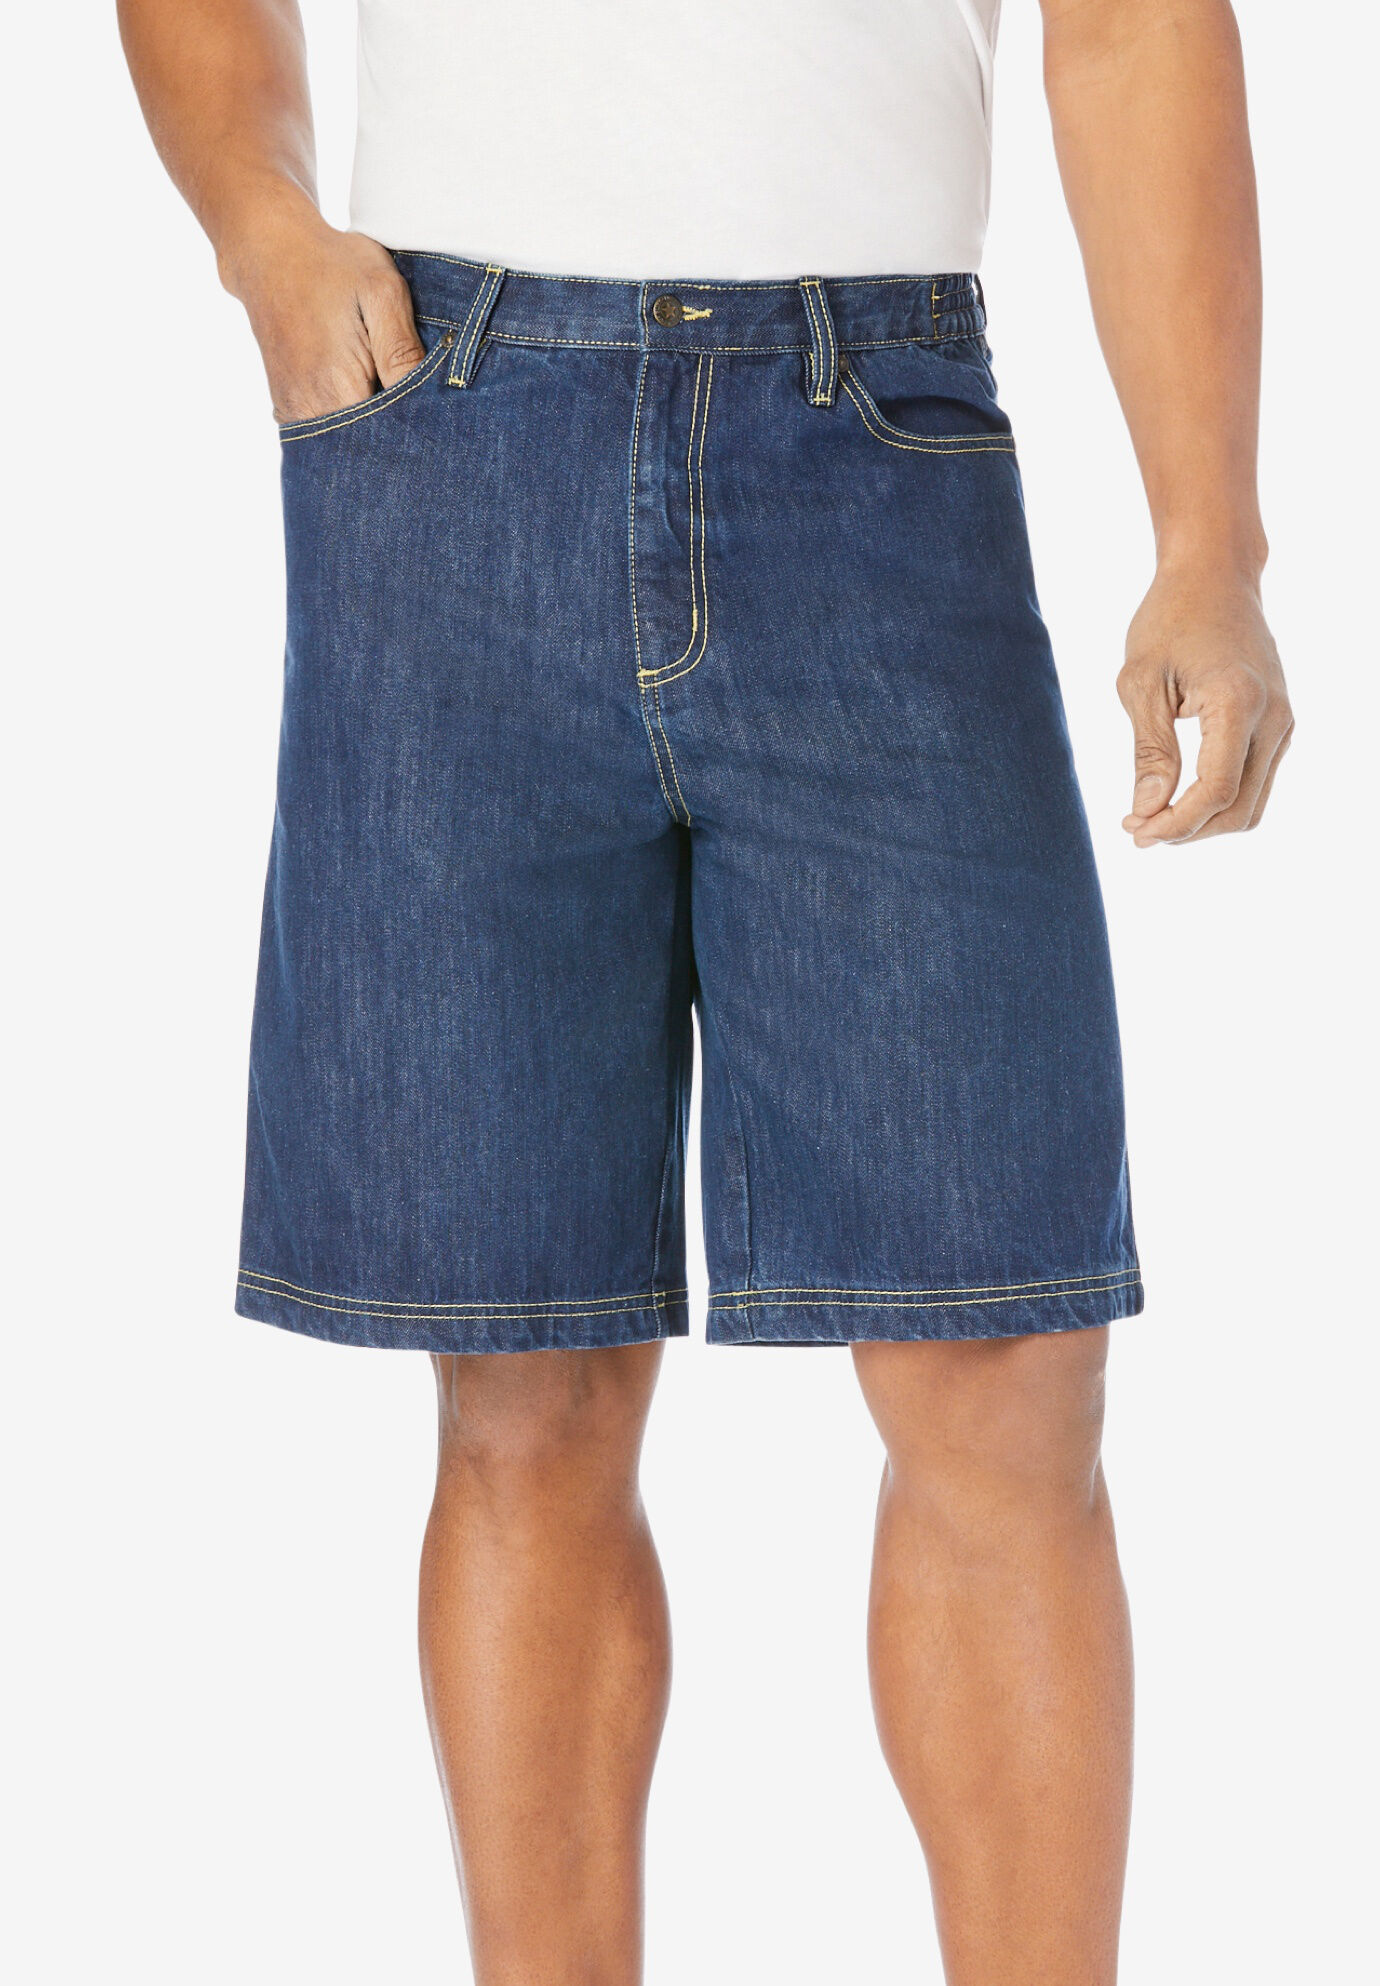 Liberty Blues™ Loose-Fit Side Elastic 5-Pocket Jeans